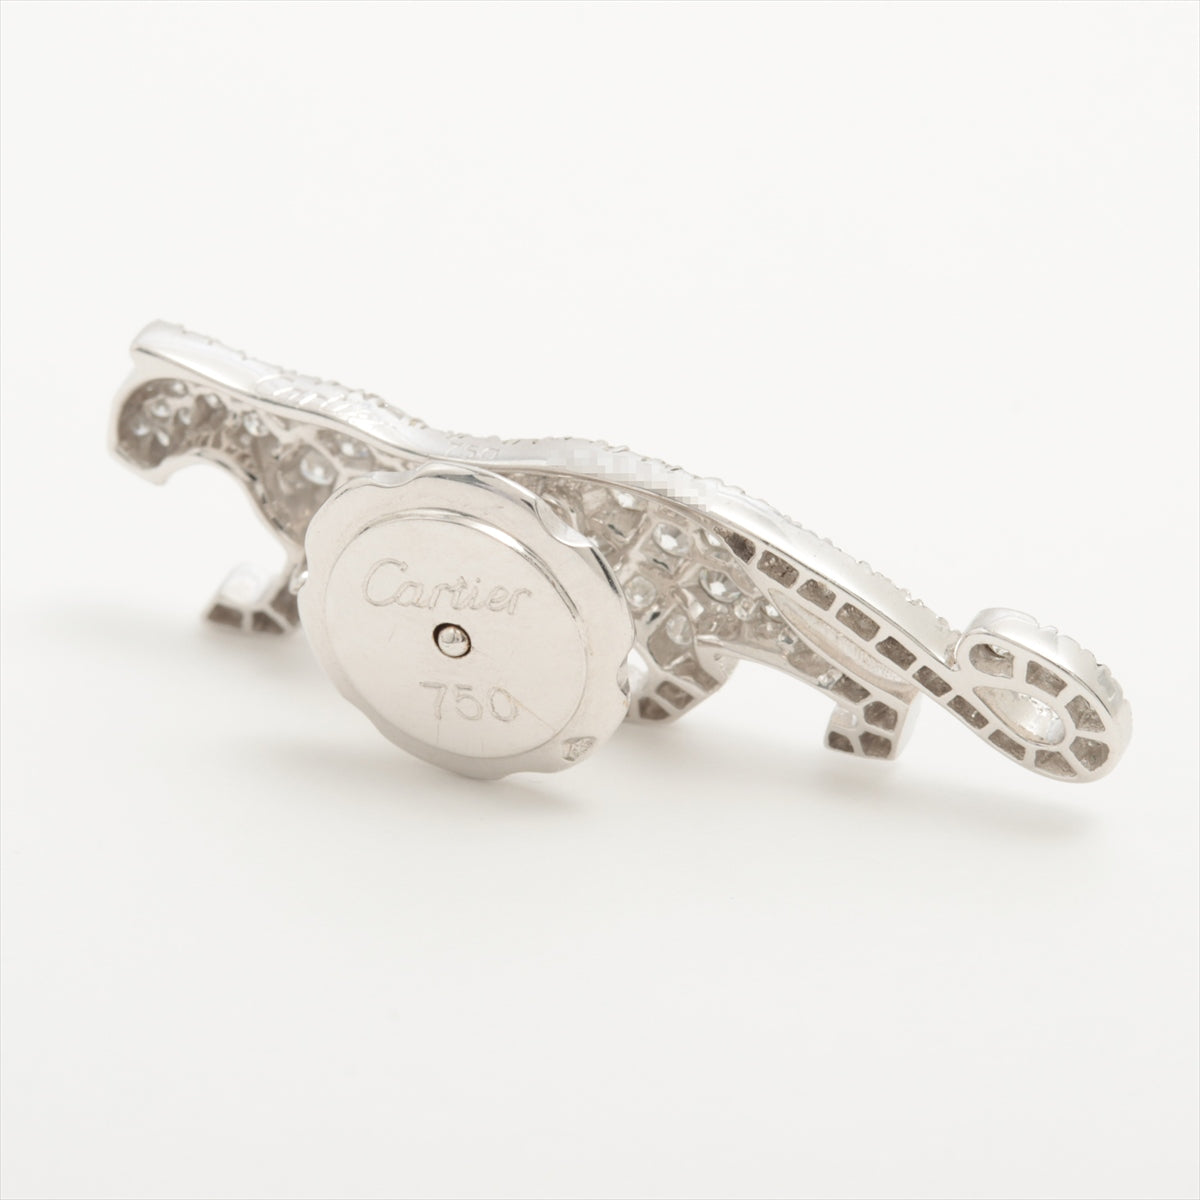 Cartier Panthère diamond Pin brooch 750(WG) 4.5g